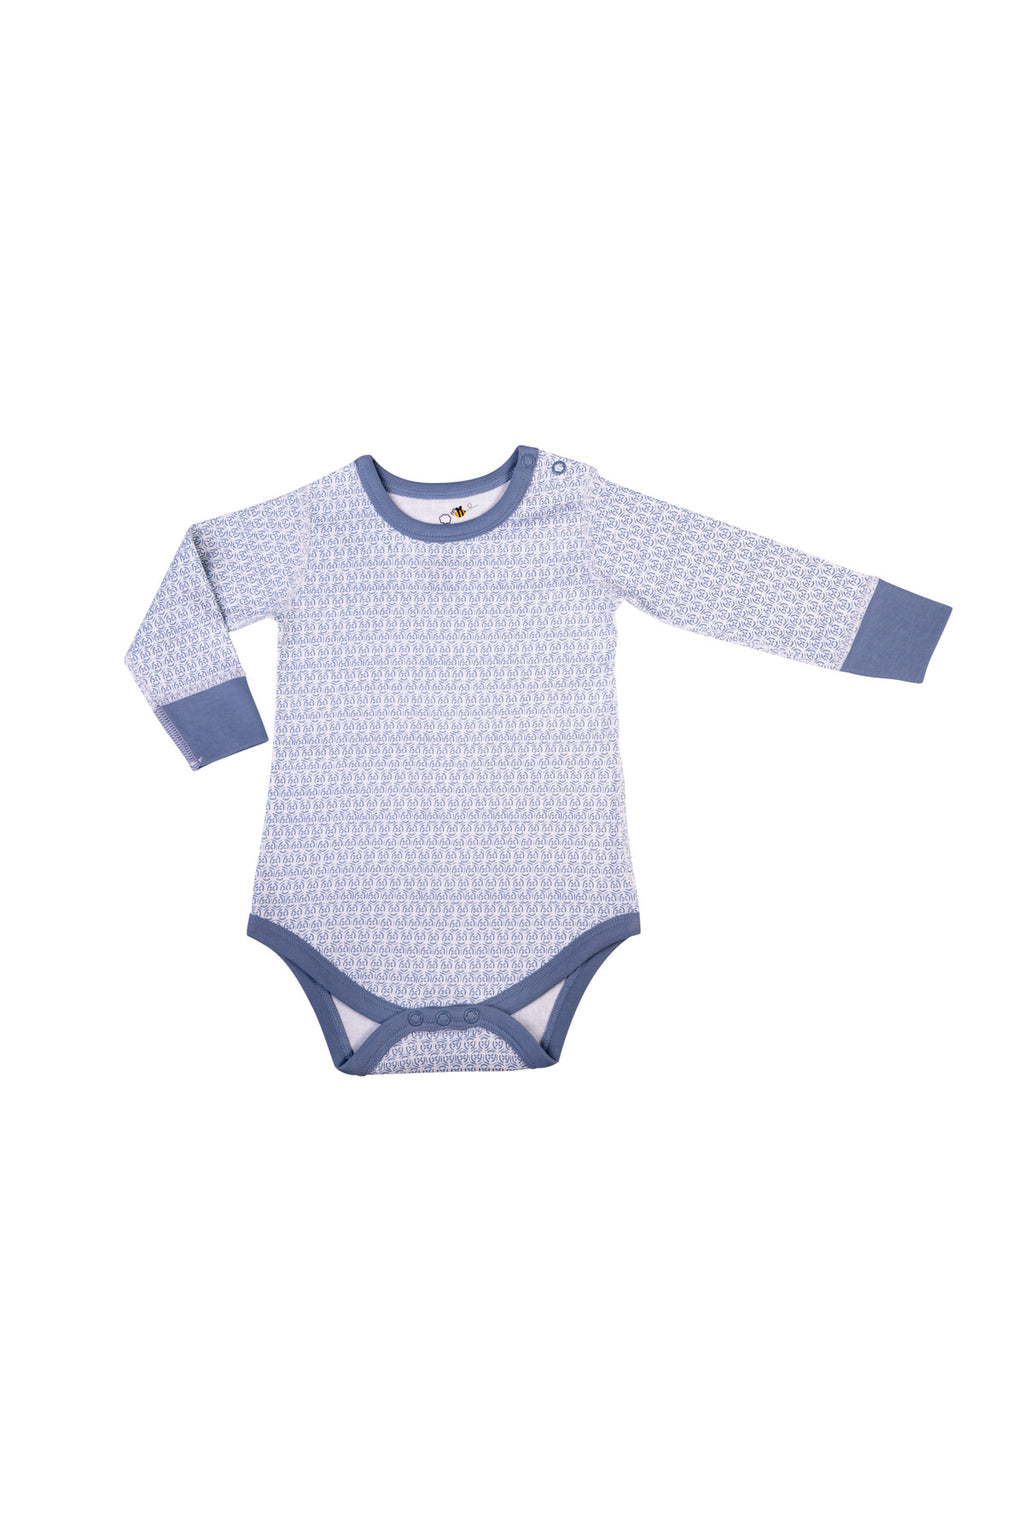 Graphic Baby Unisex Organic Long-Sleeve Bodysuits